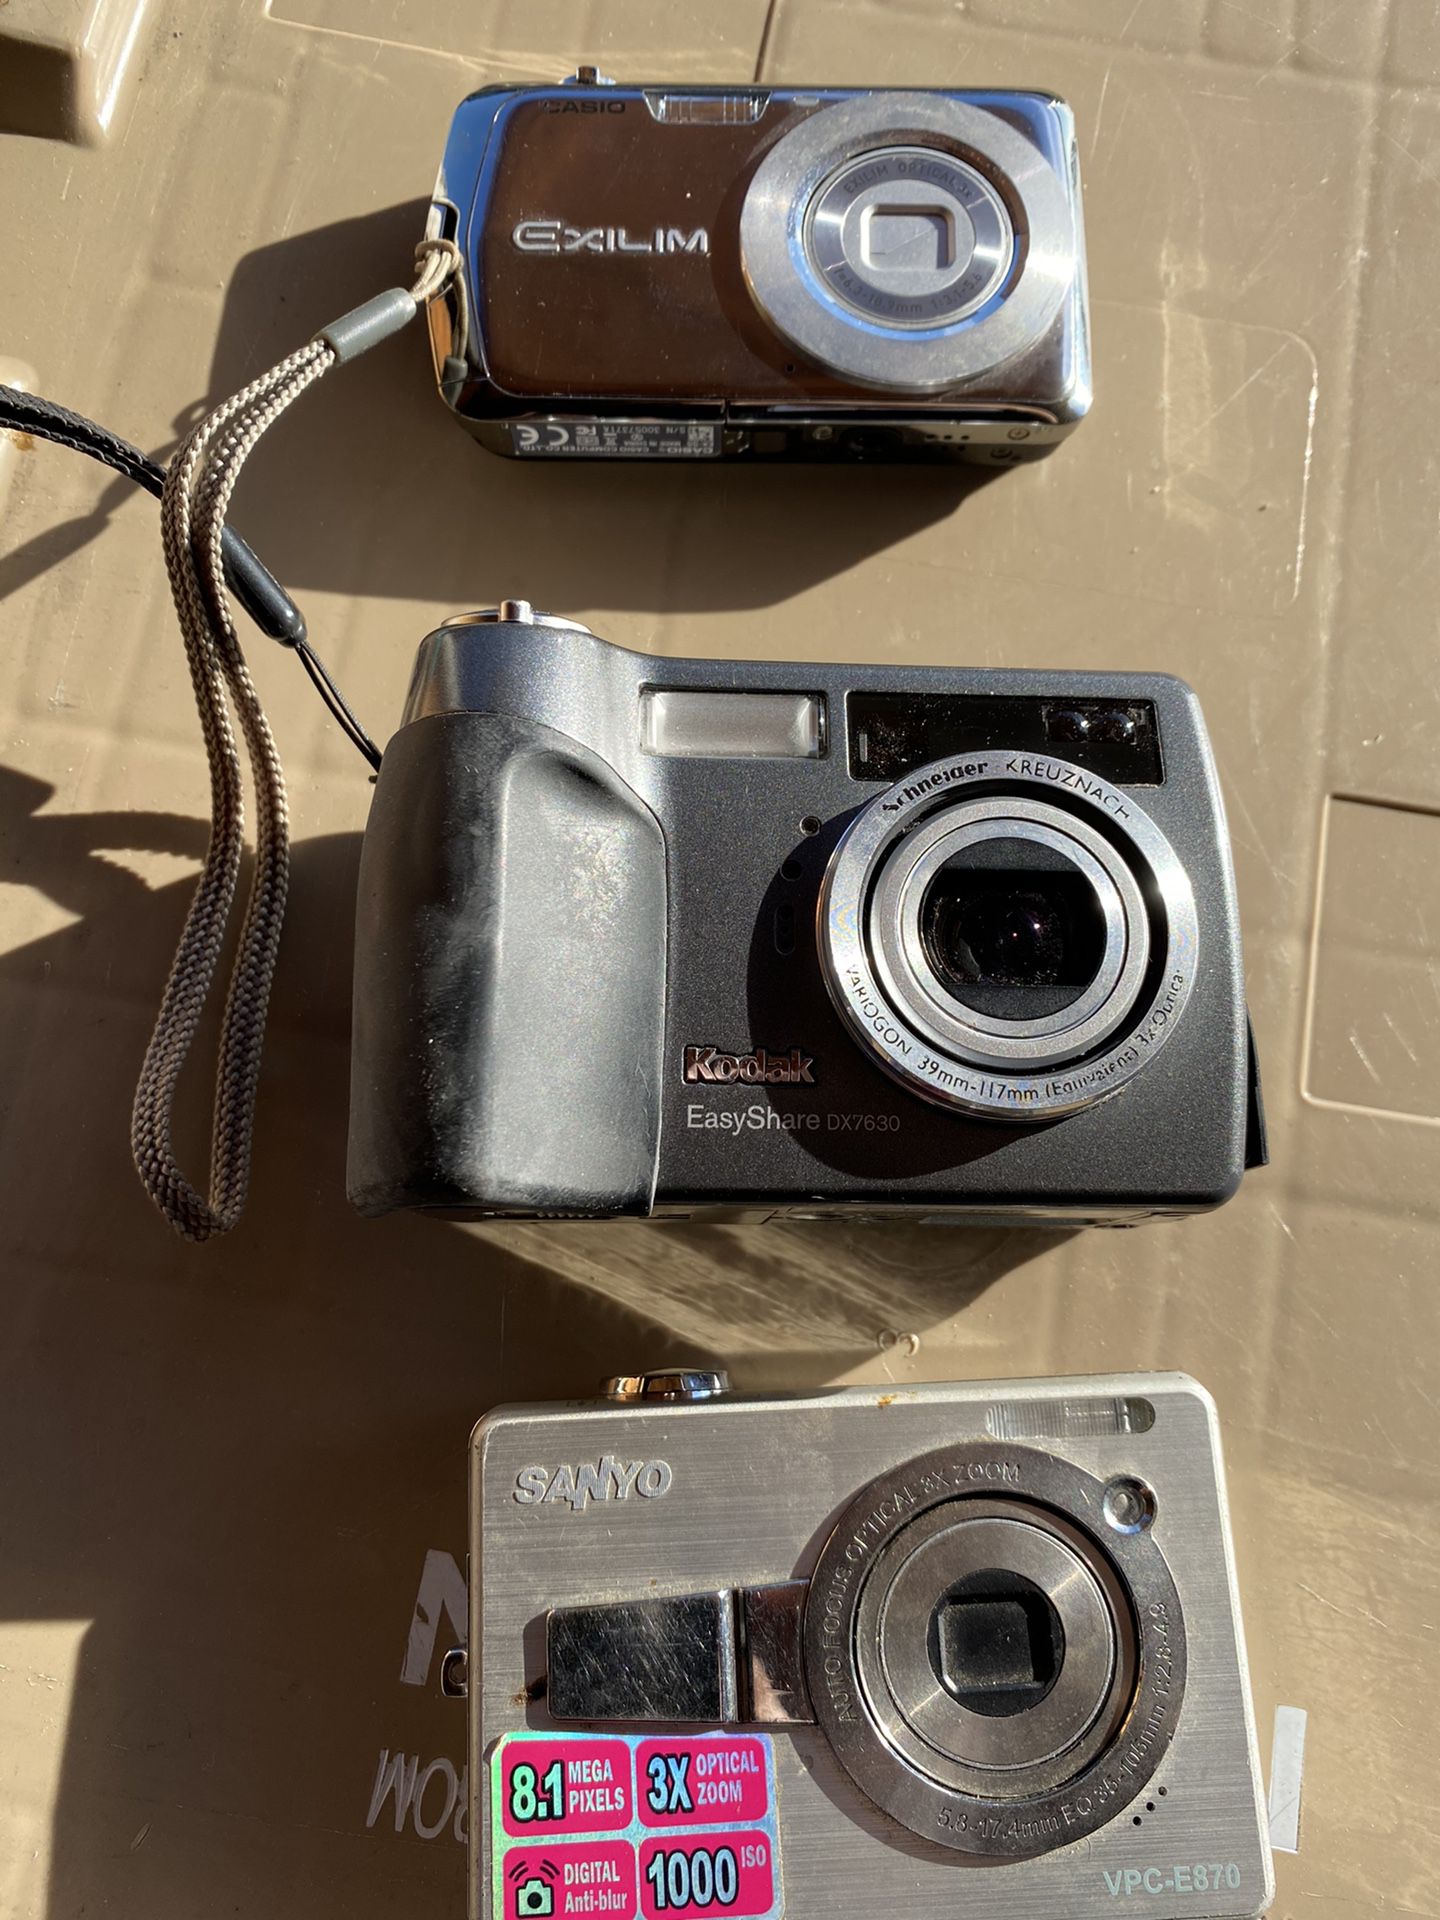 Digital camera all three